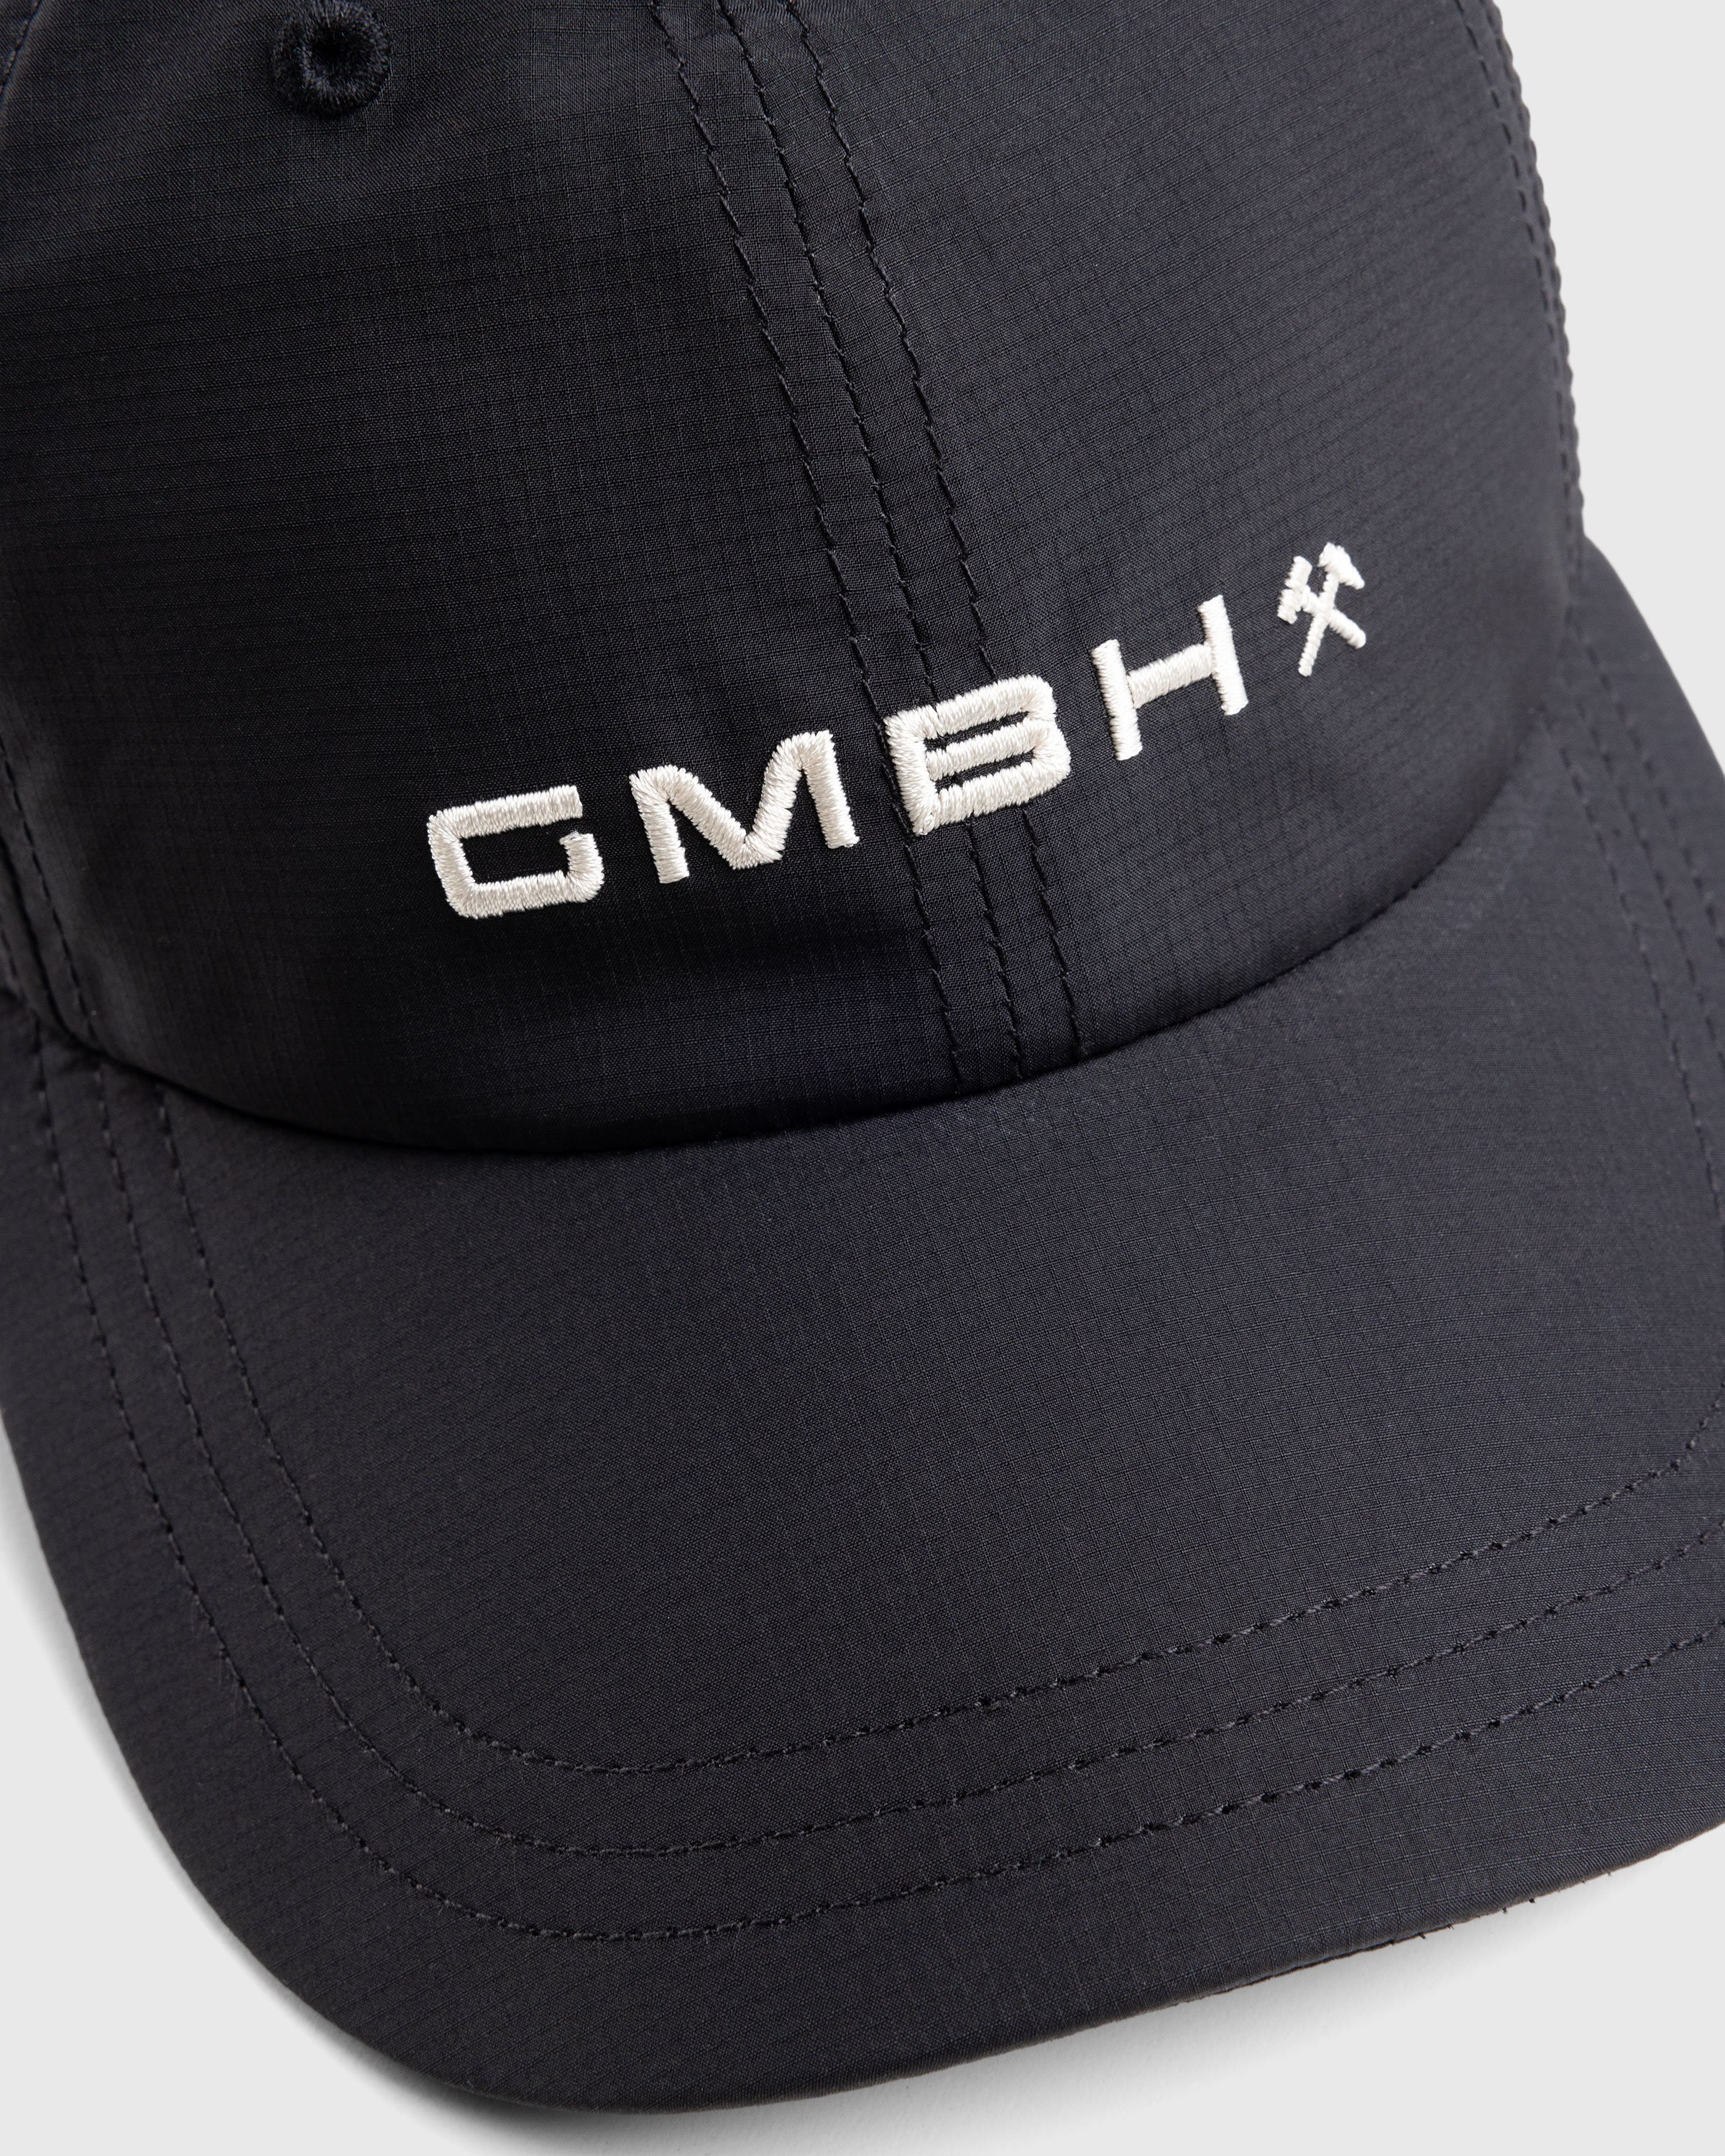 GmbH - Logo Embroidered Baseball Cap Black - Accessories - Black - Image 4